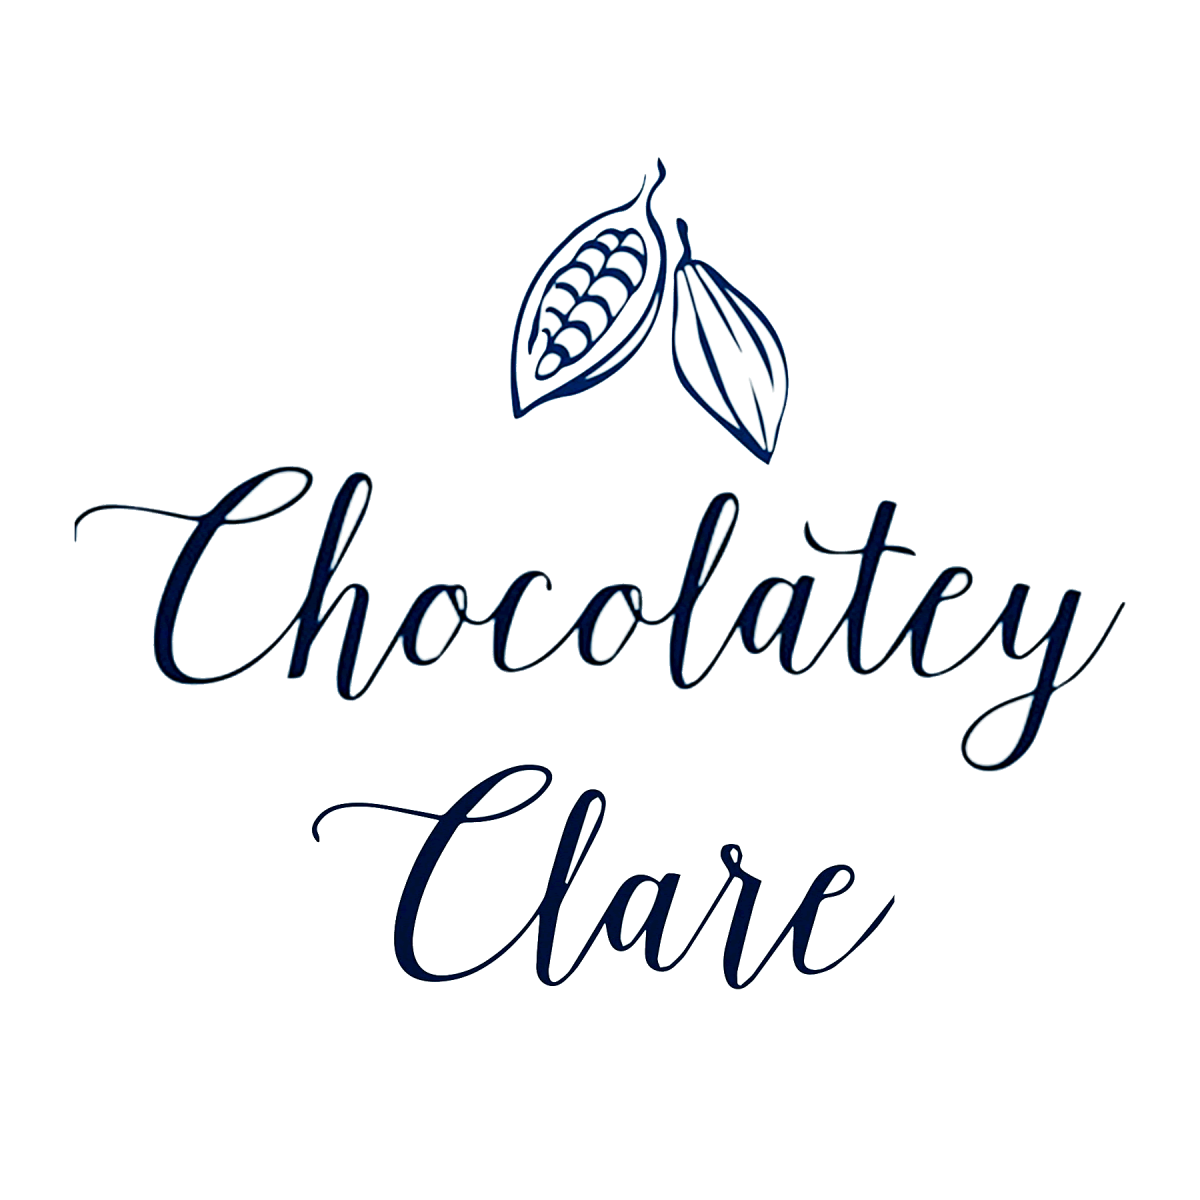 Chocolatey Clare